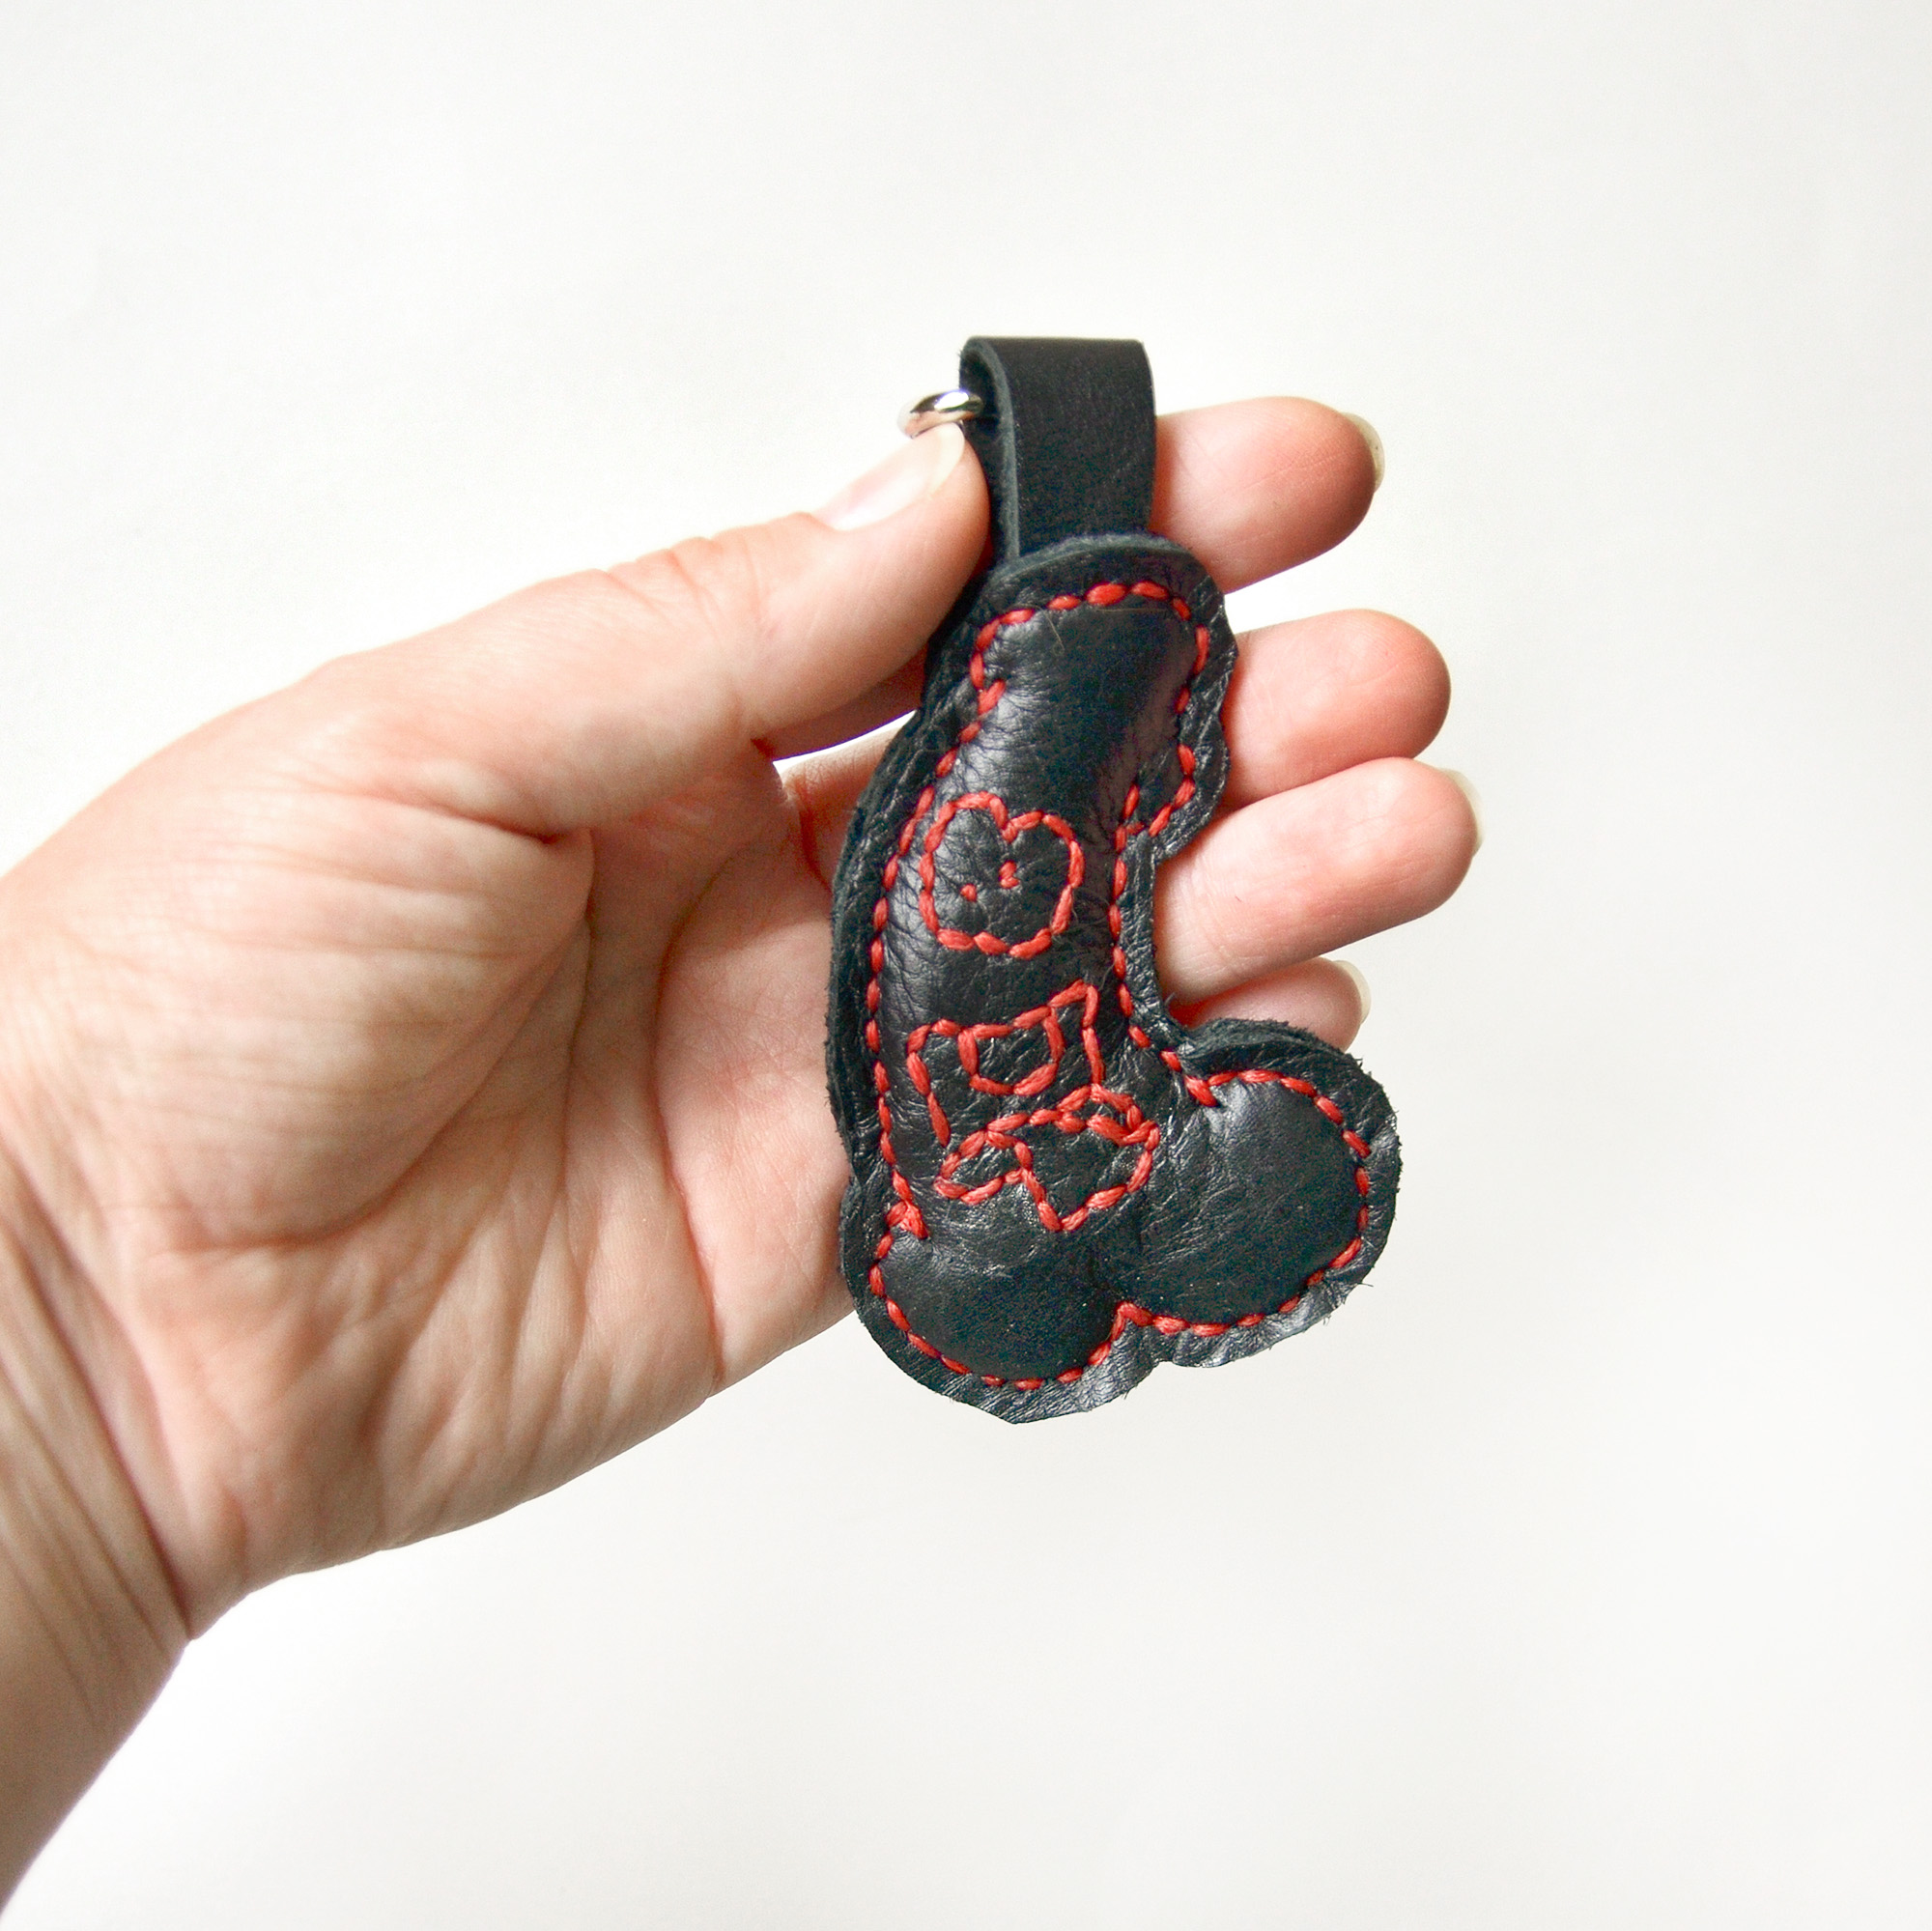 Penis keychain face Leather black dick keyholder, gift image image pic